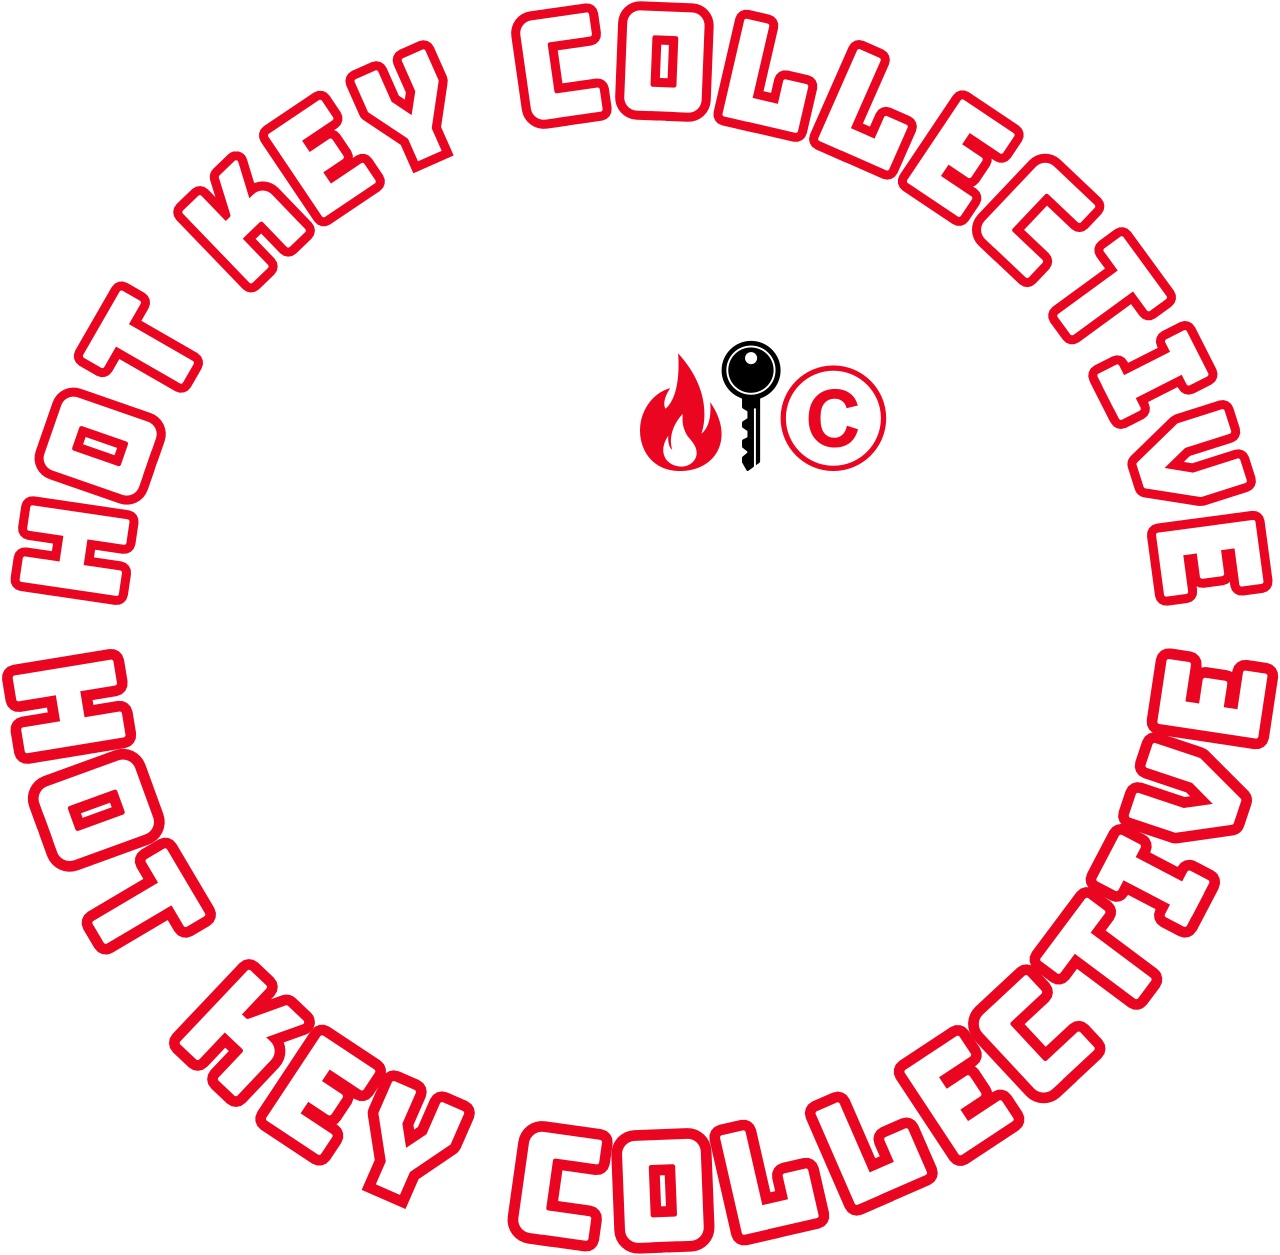 Hot Key Collective's logo